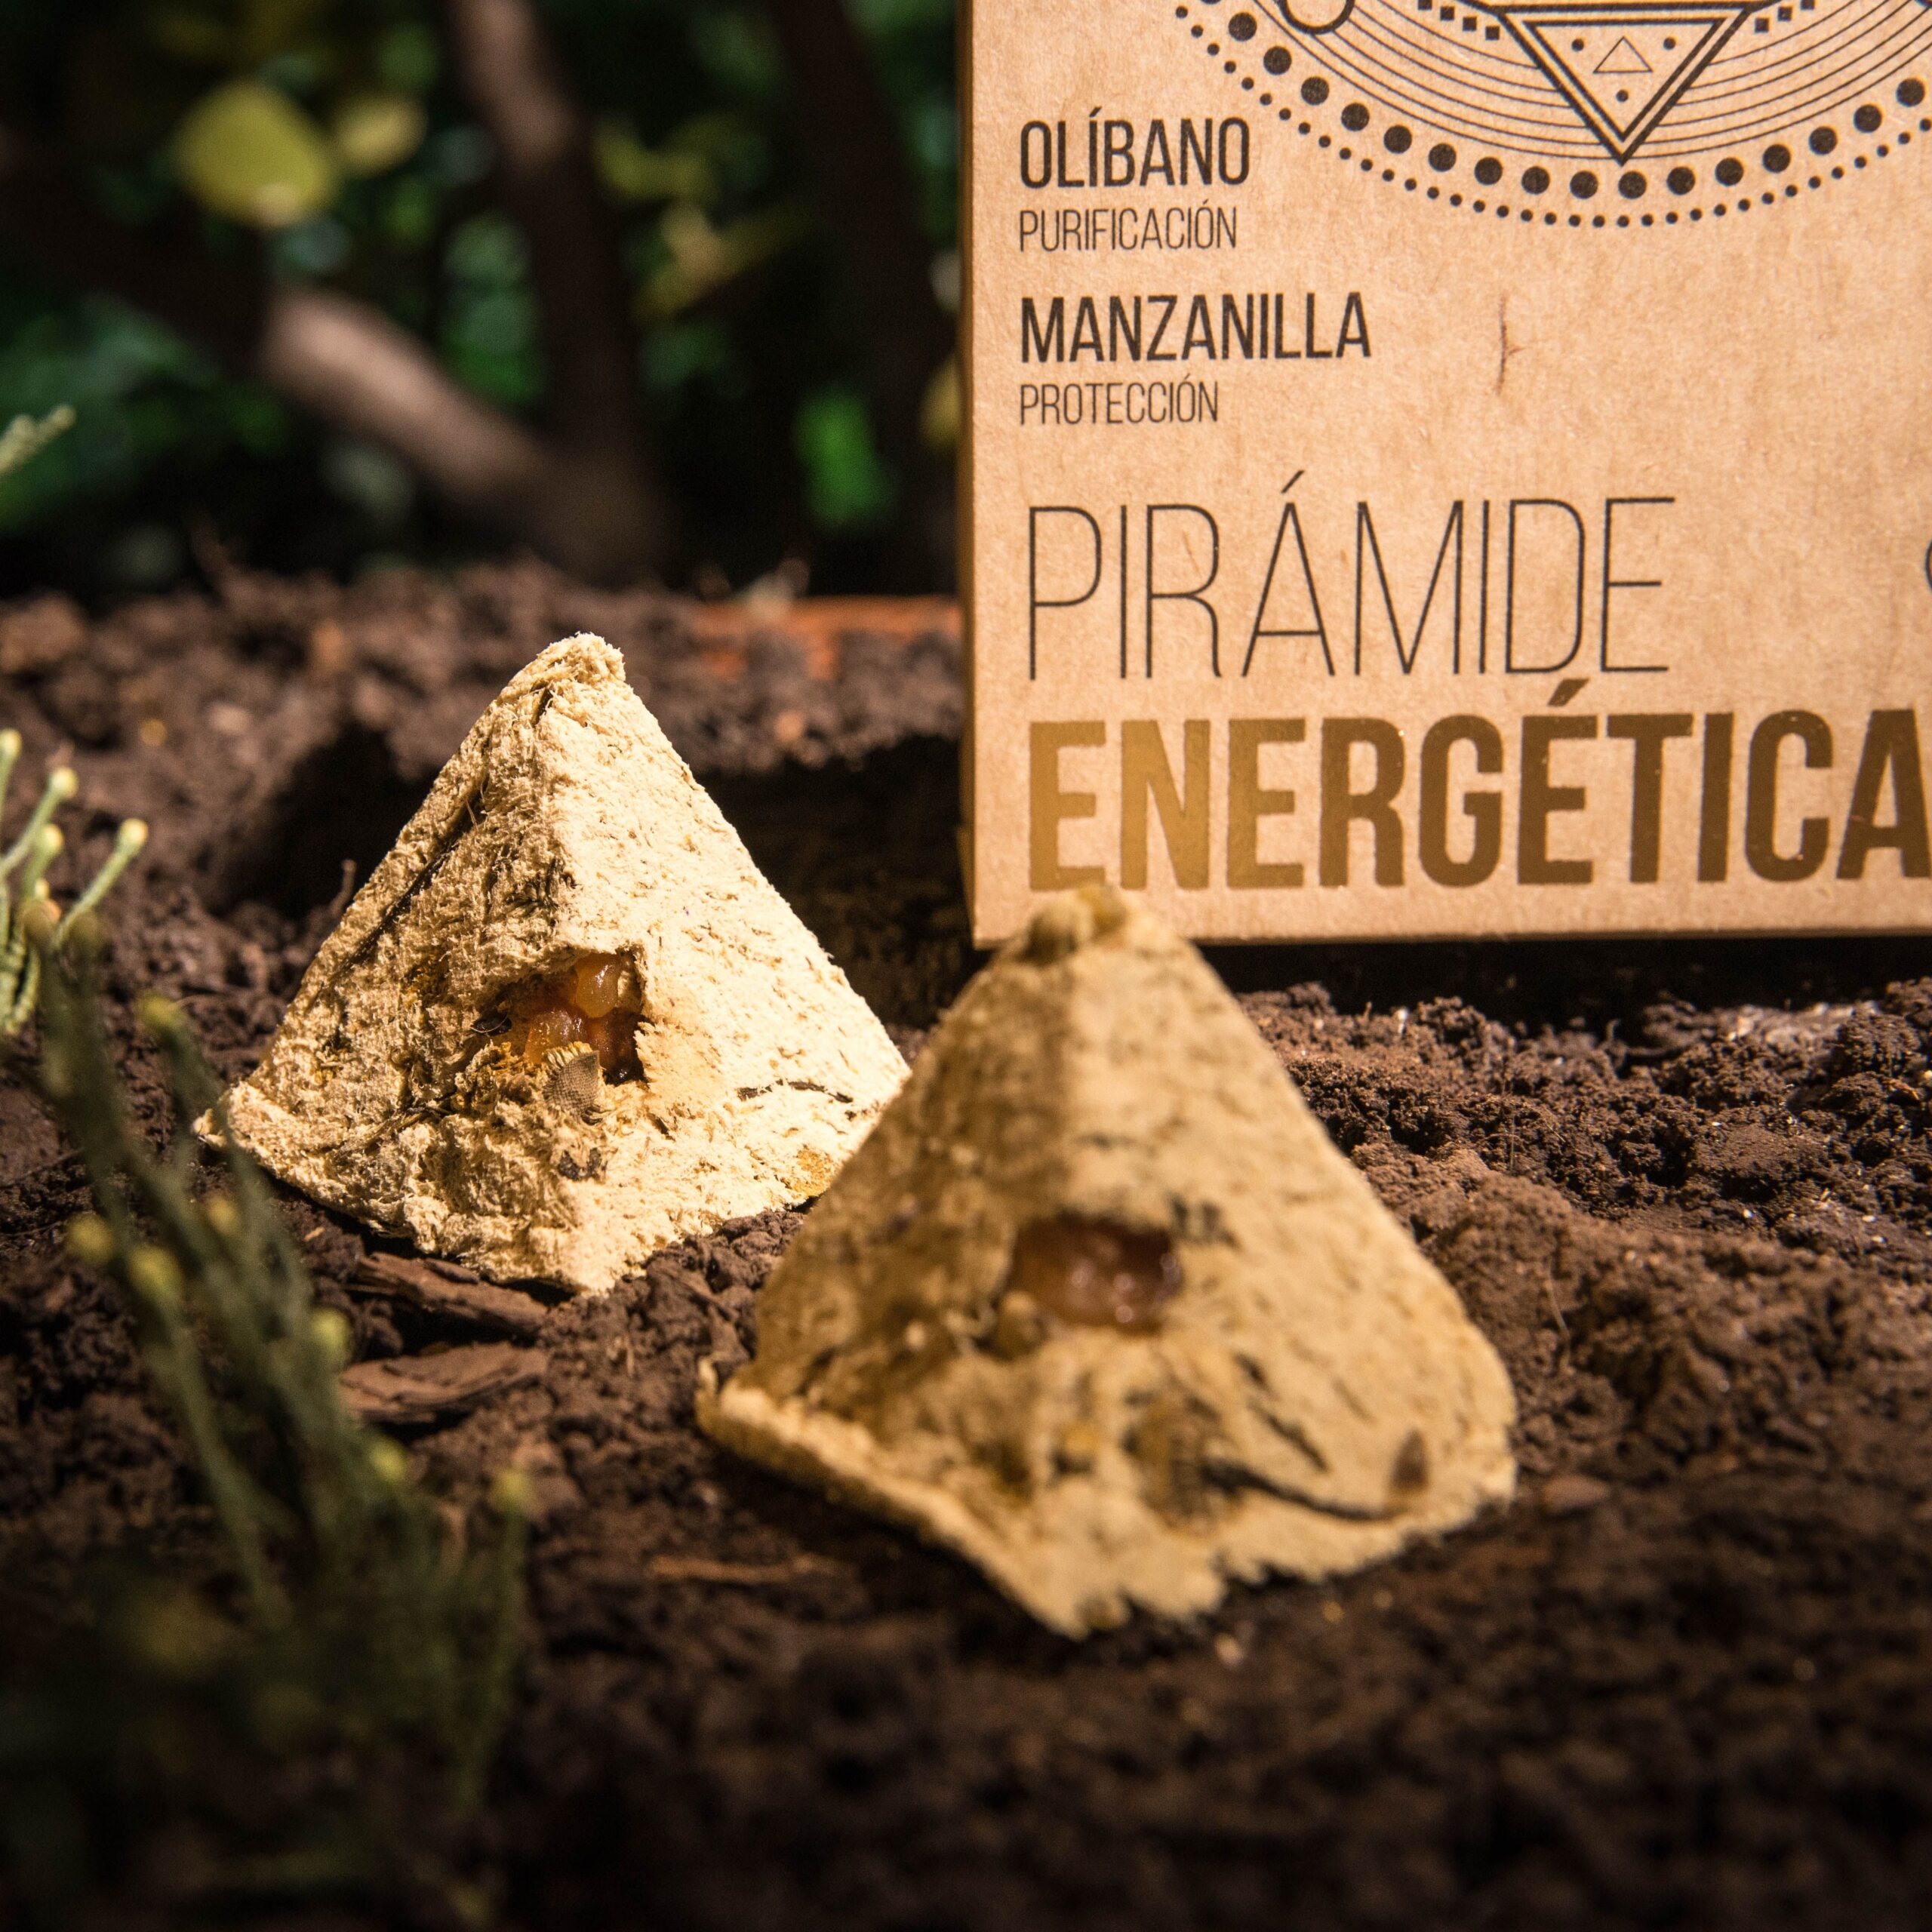 https://comprasinplastico.com/wp-content/uploads/2023/05/Piramide-Energetica-Manzanilla-y-Olibano-2-scaled.jpeg